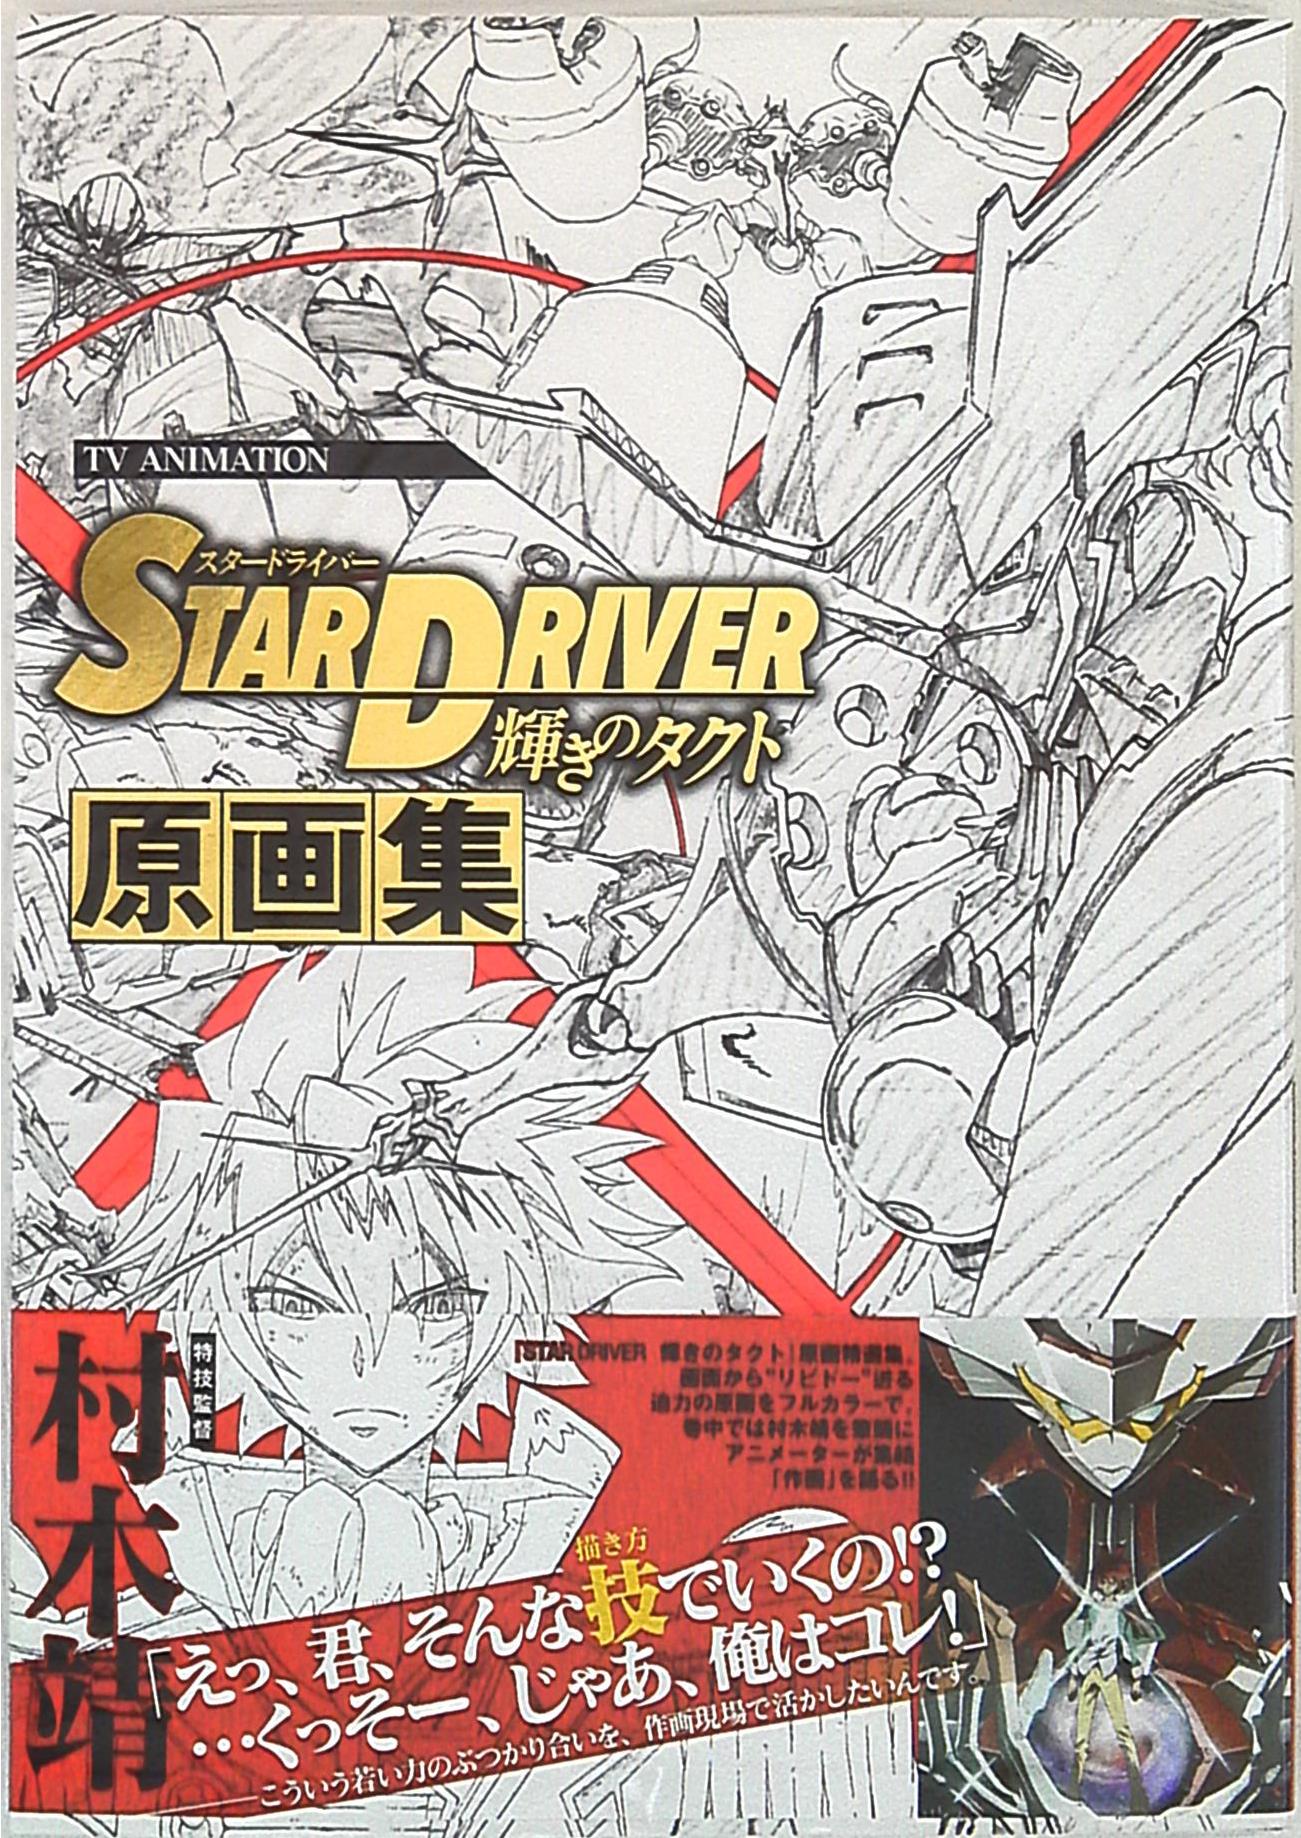 TVアニメーション「STAR DRIVER 輝きのタクト」原画集 (帯付